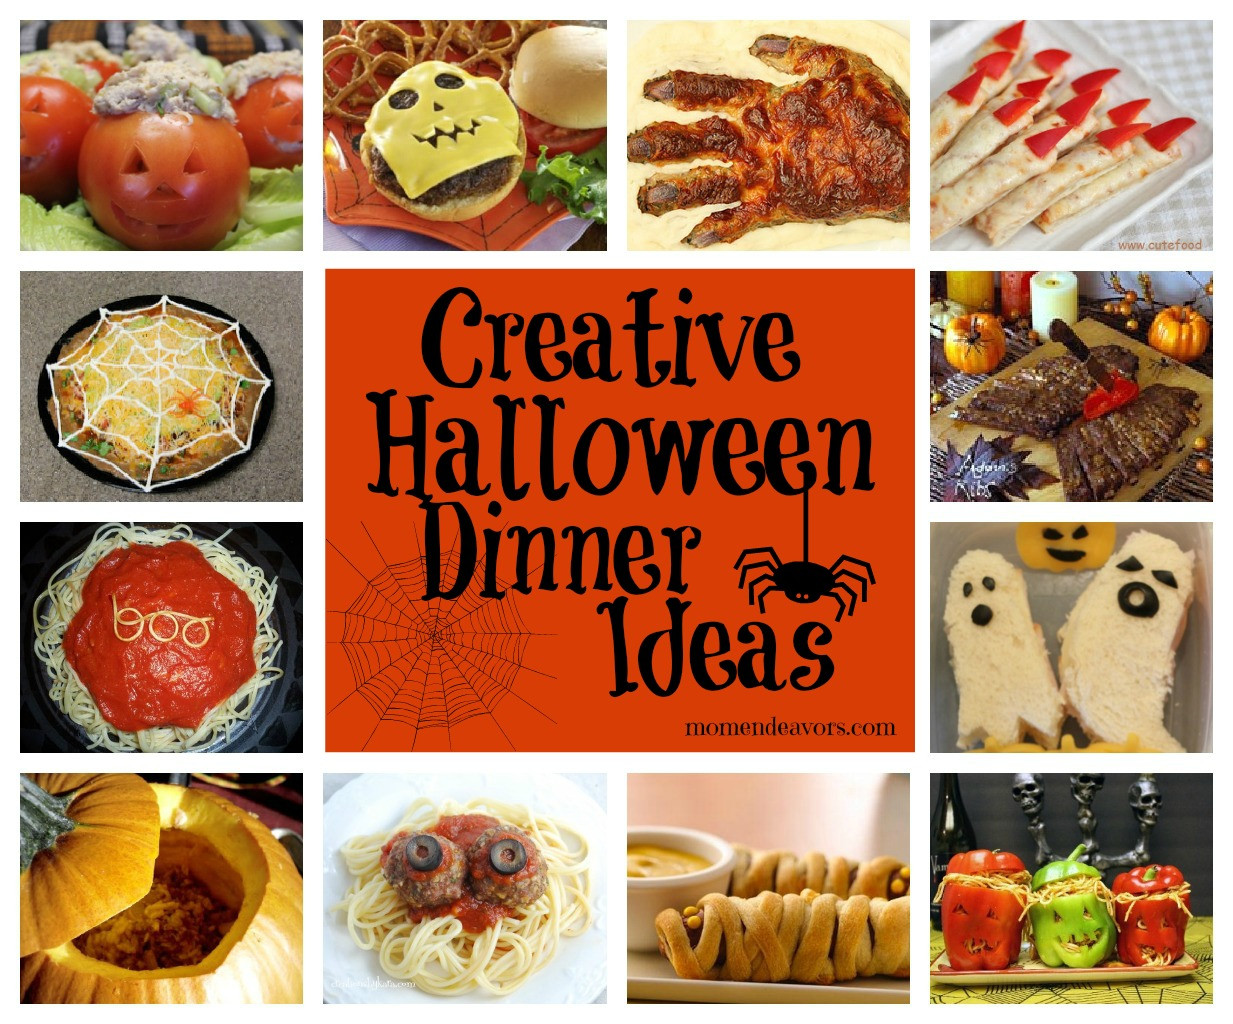 Fun Halloween Dinner Party Ideas
 30 Halloween Fun Food Recipes for Kids